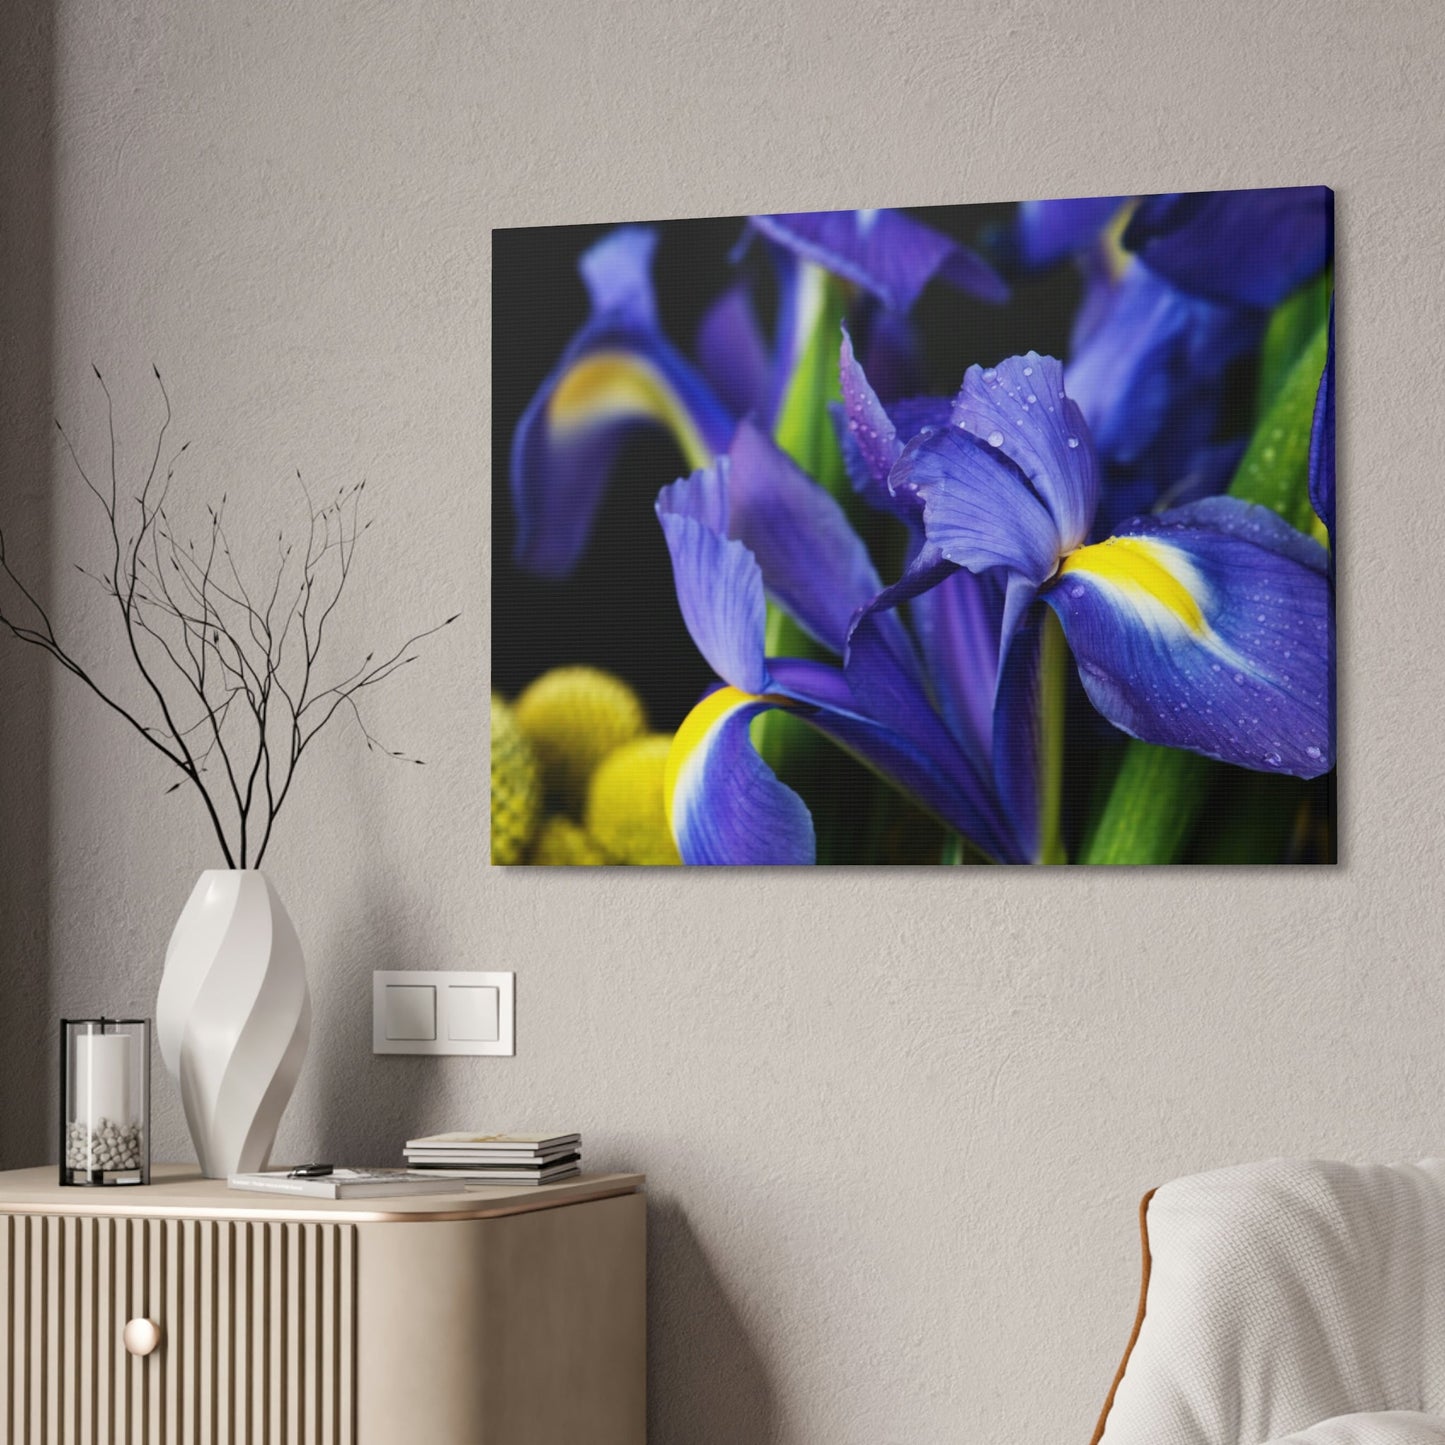 Iris Dreams: A Canvas of Purple and Blue Hues